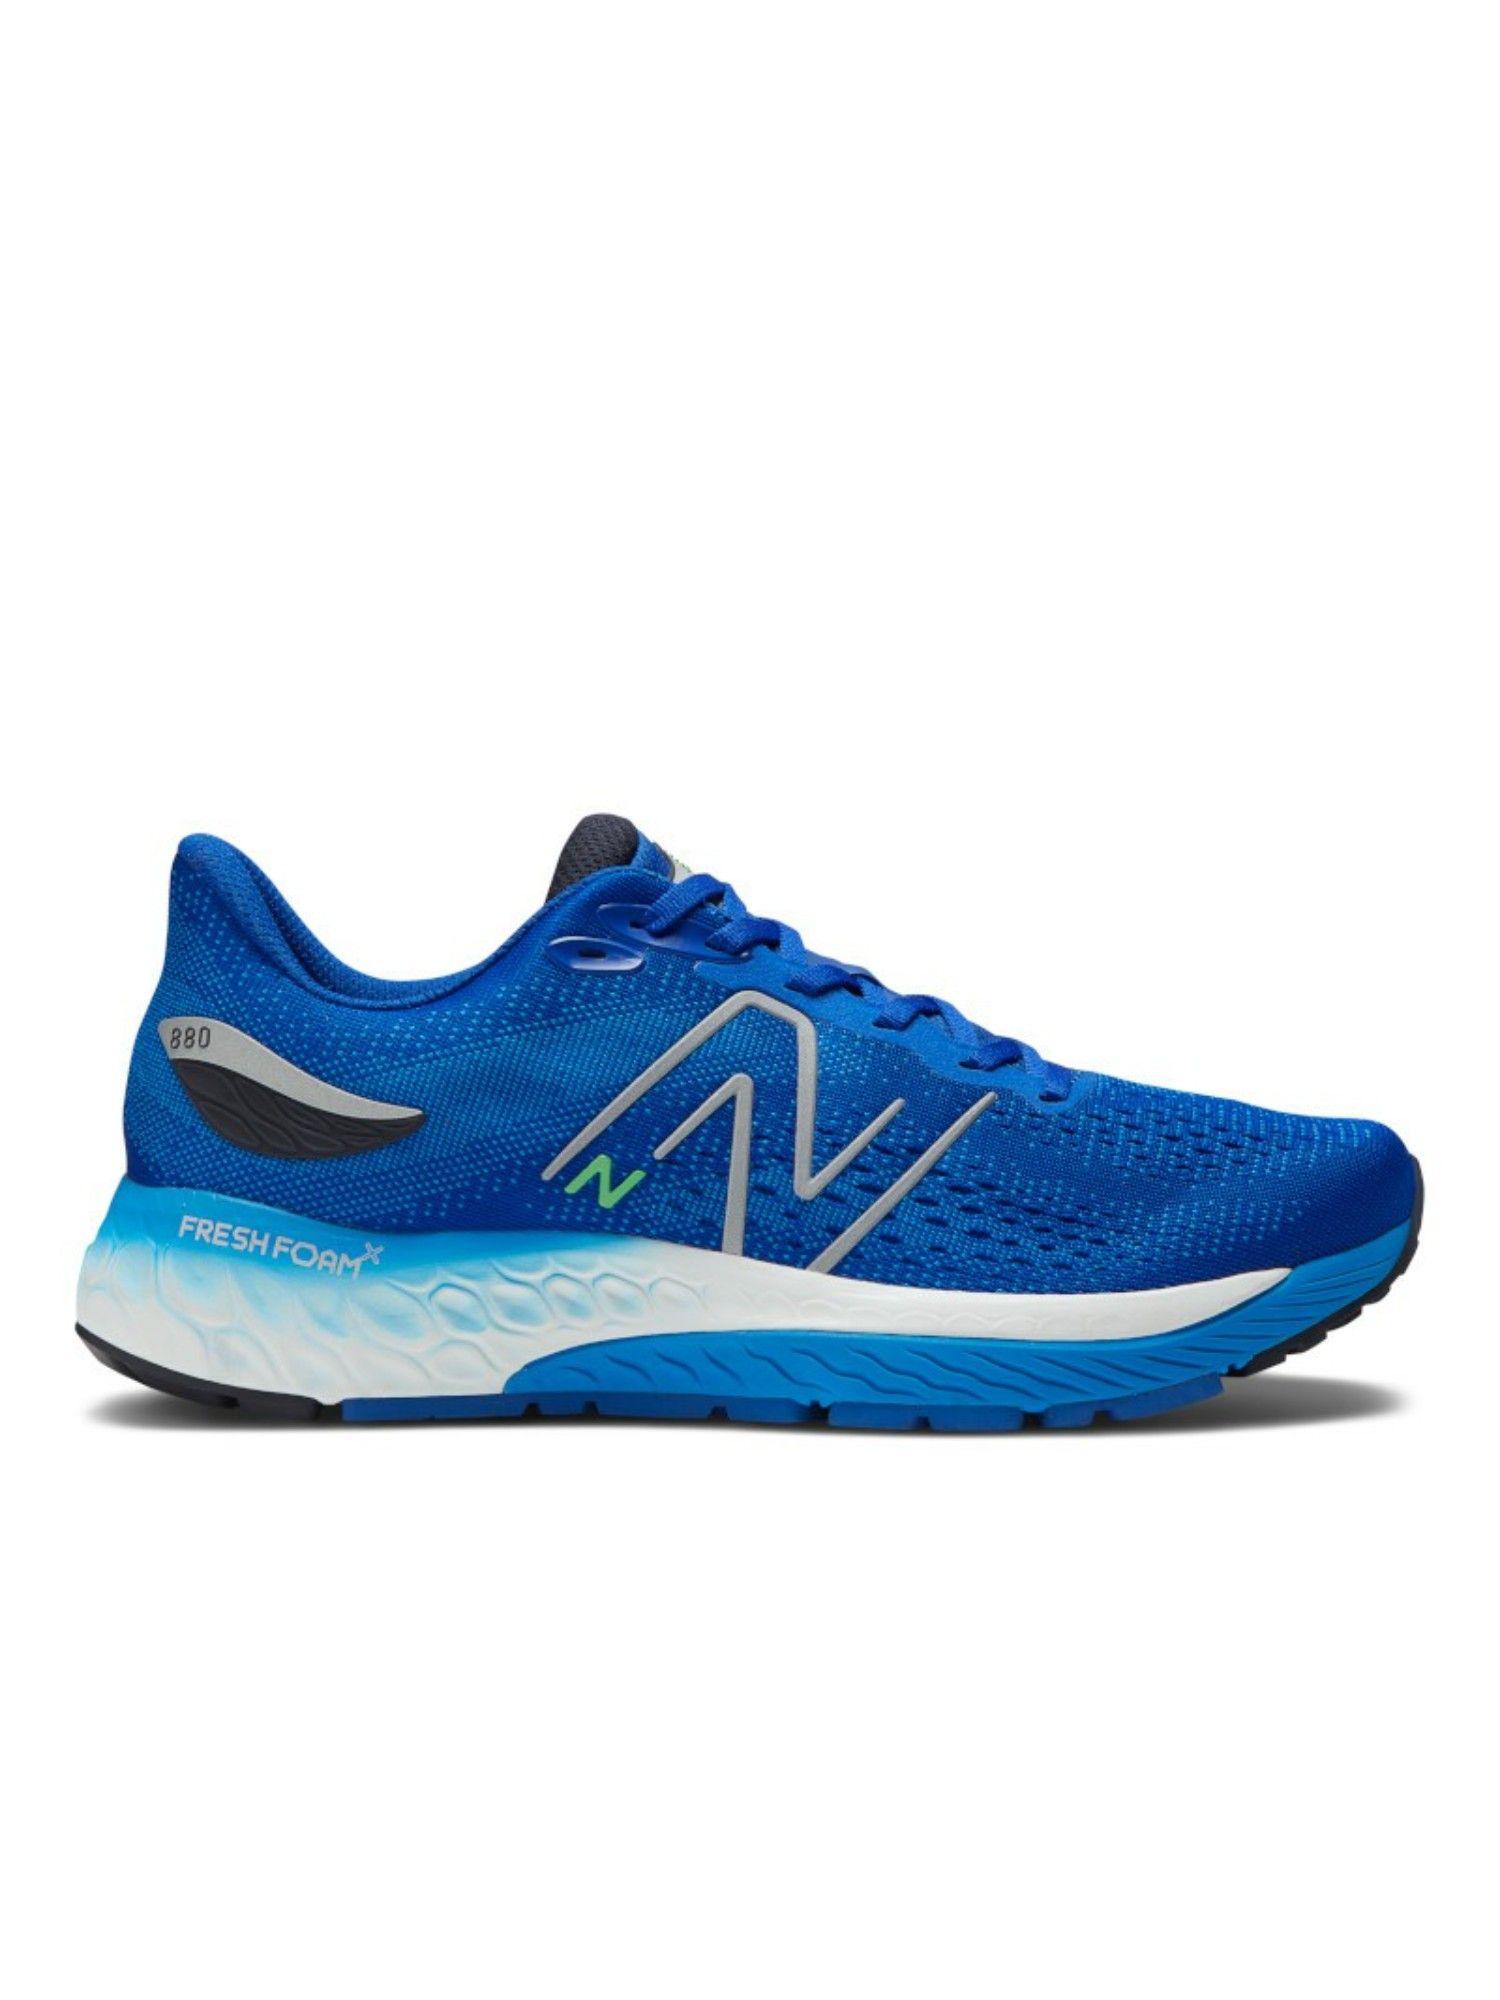 men 880 blue running shoe